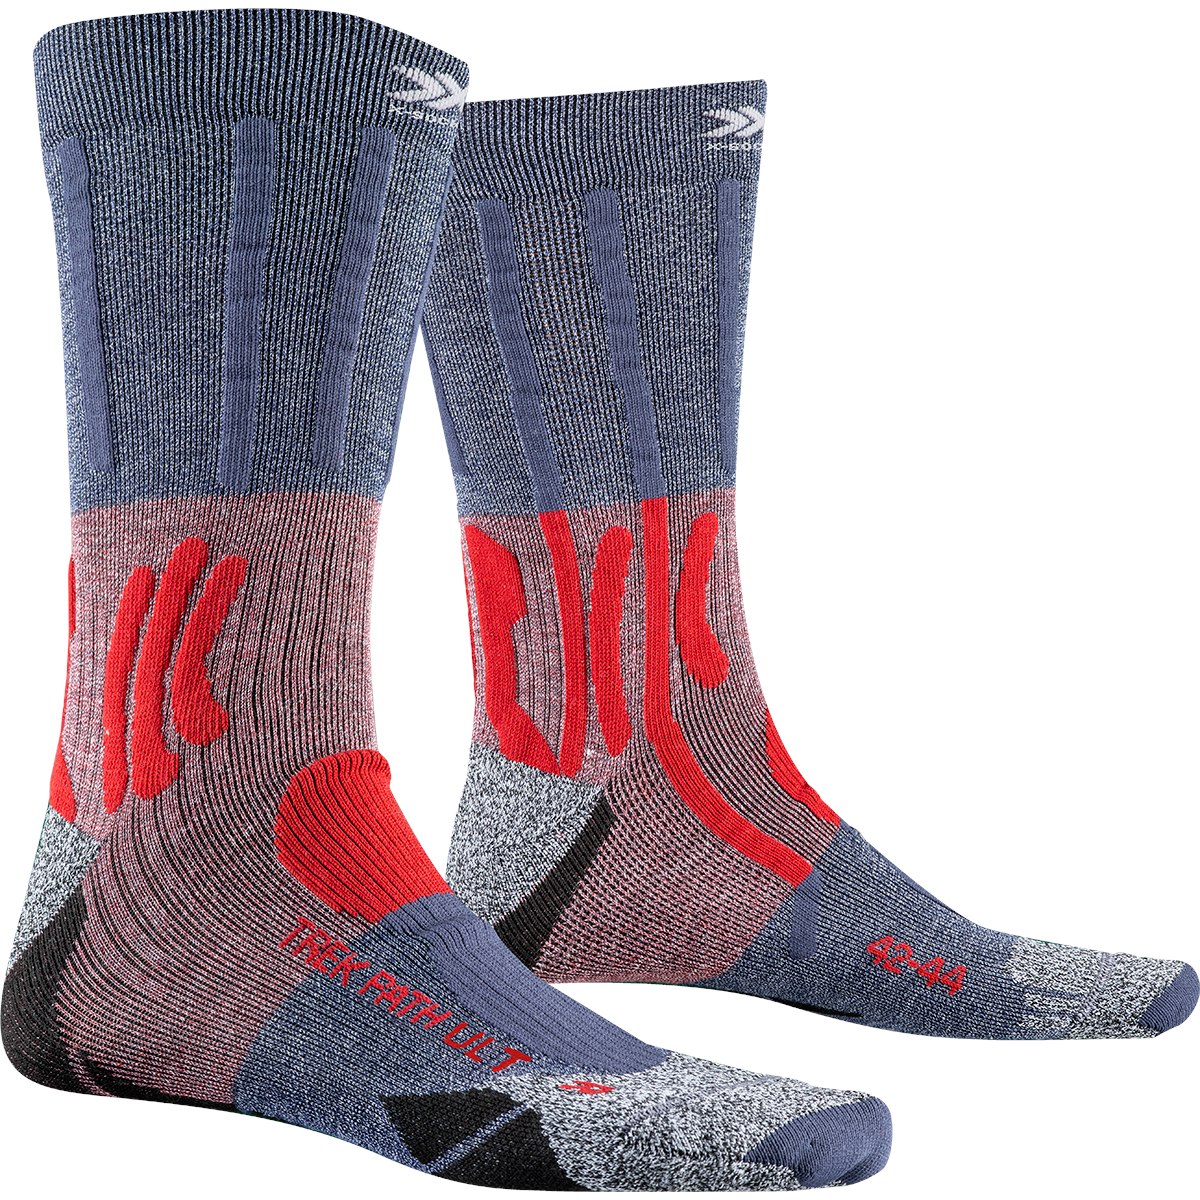 Productfoto van X-Socks Trek Path Ultra LT Sokken - dolomite grey melange/namib red melange